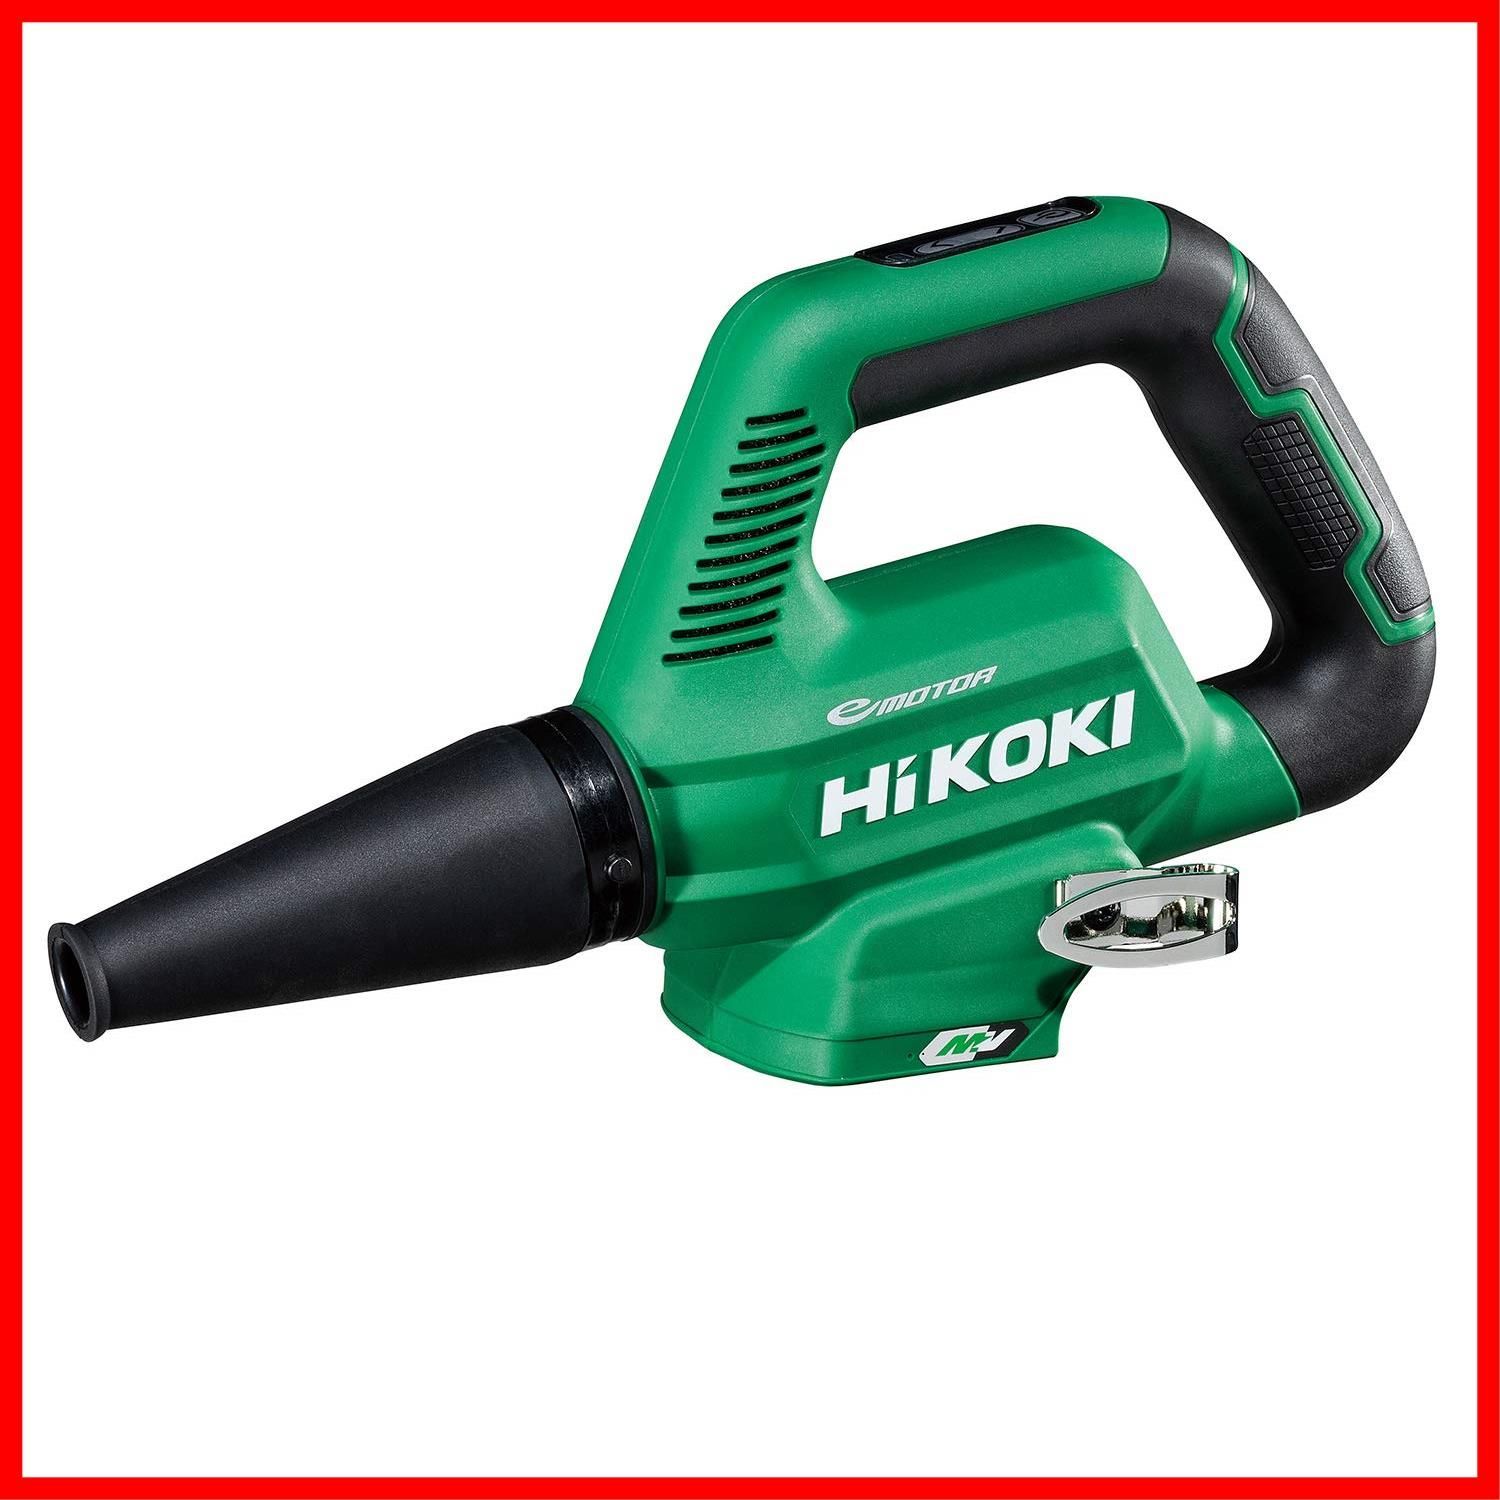 HiKOKI(ハイコーキ) 36V 充電式 ブロワ 小型 軽量 低騒音 風量3段切替